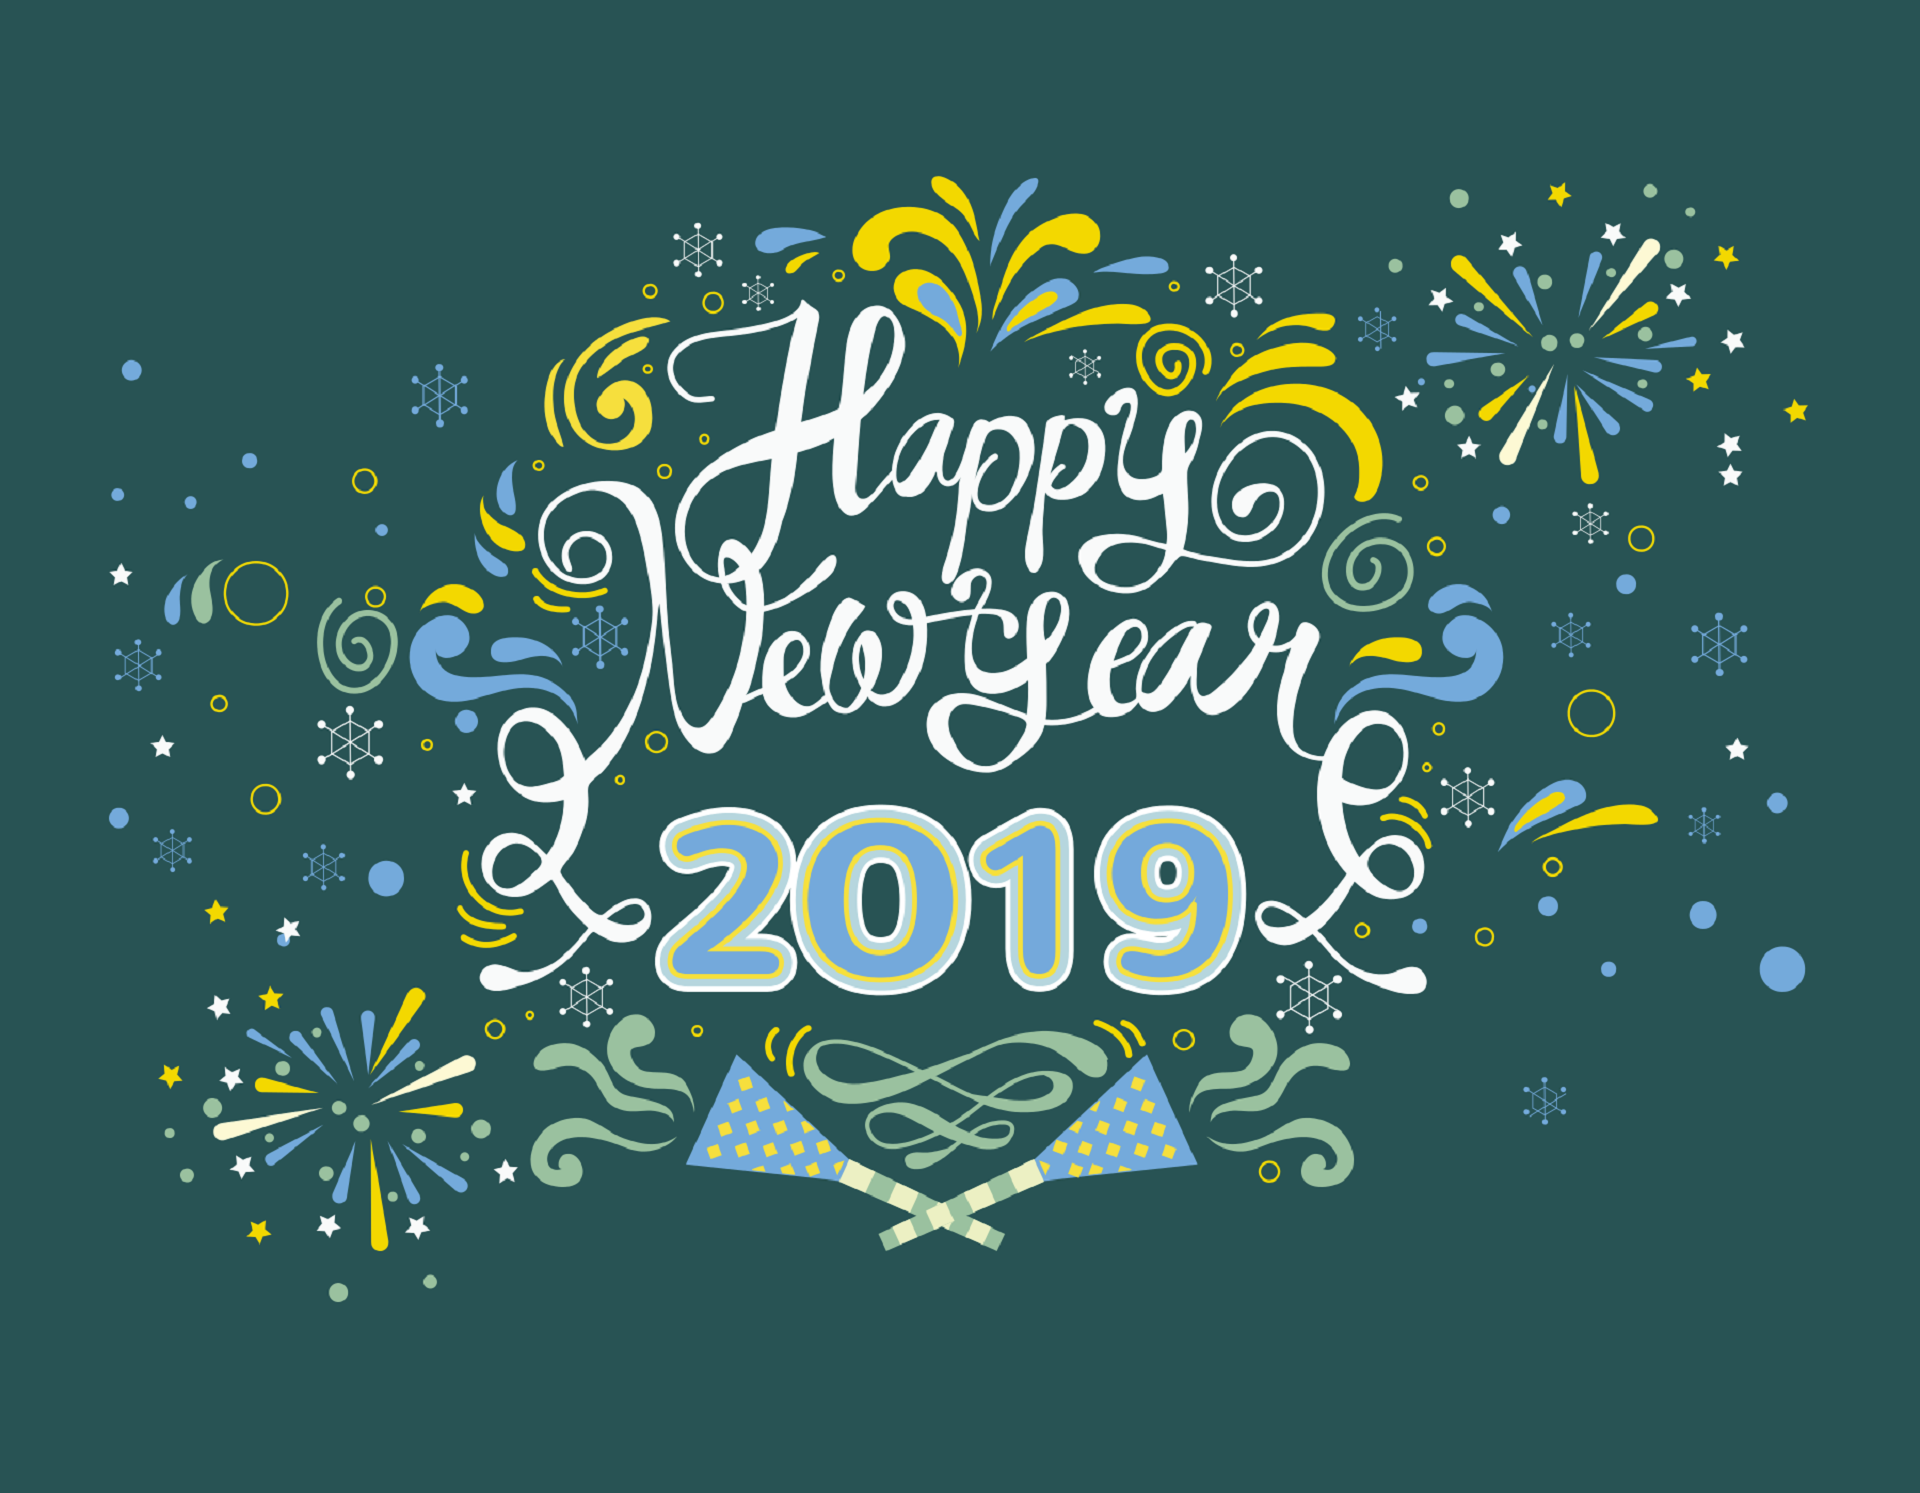 Happy New Year 2019 Wallpaper